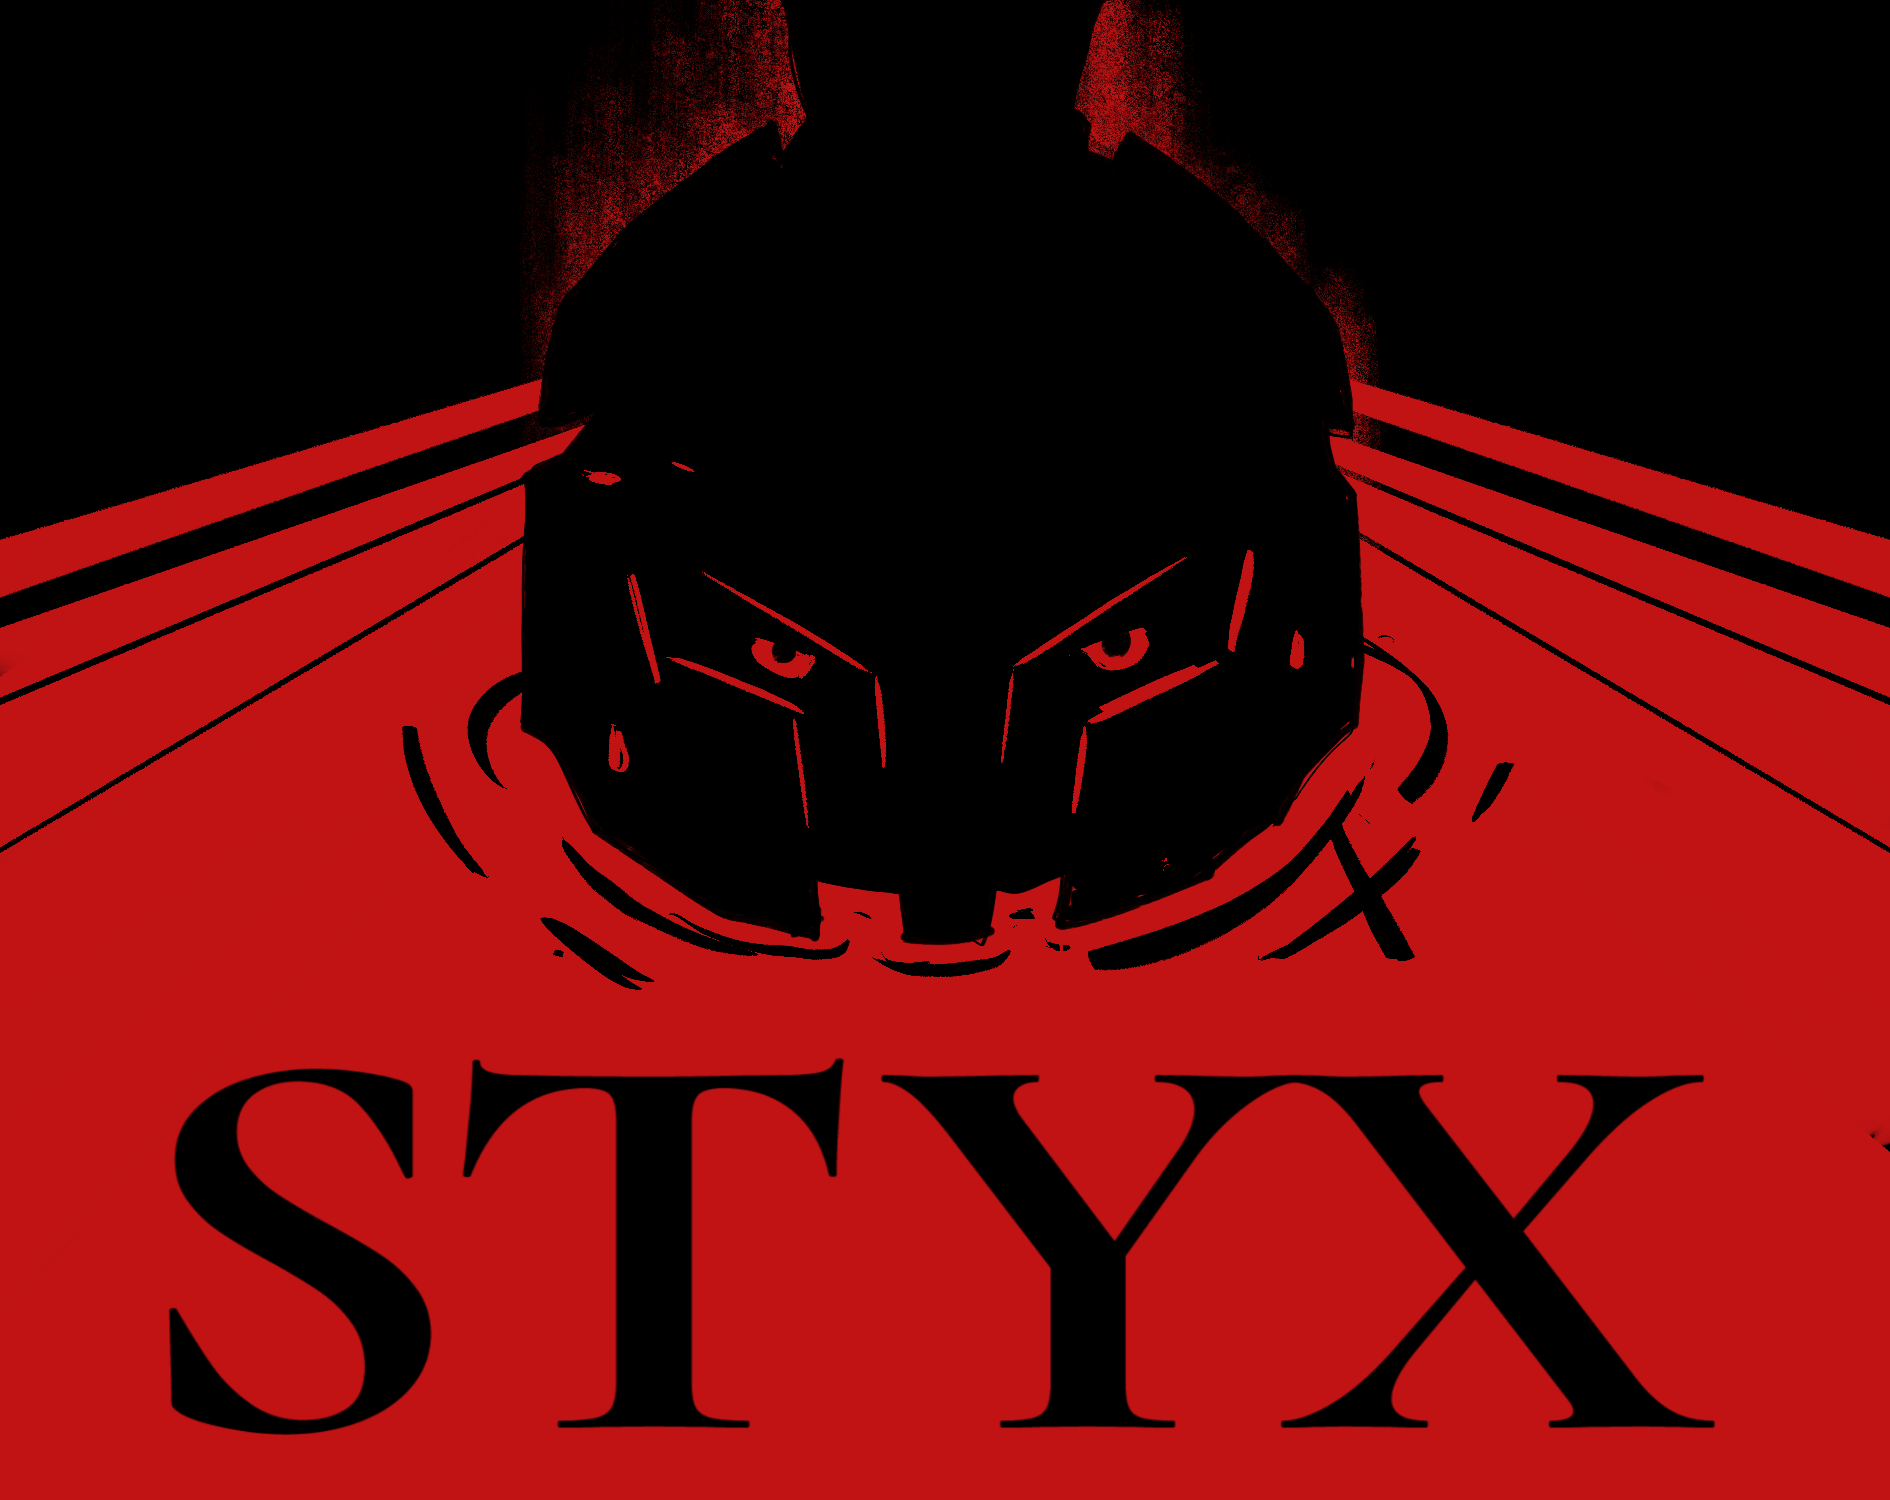 STYX - an underworld odyssey